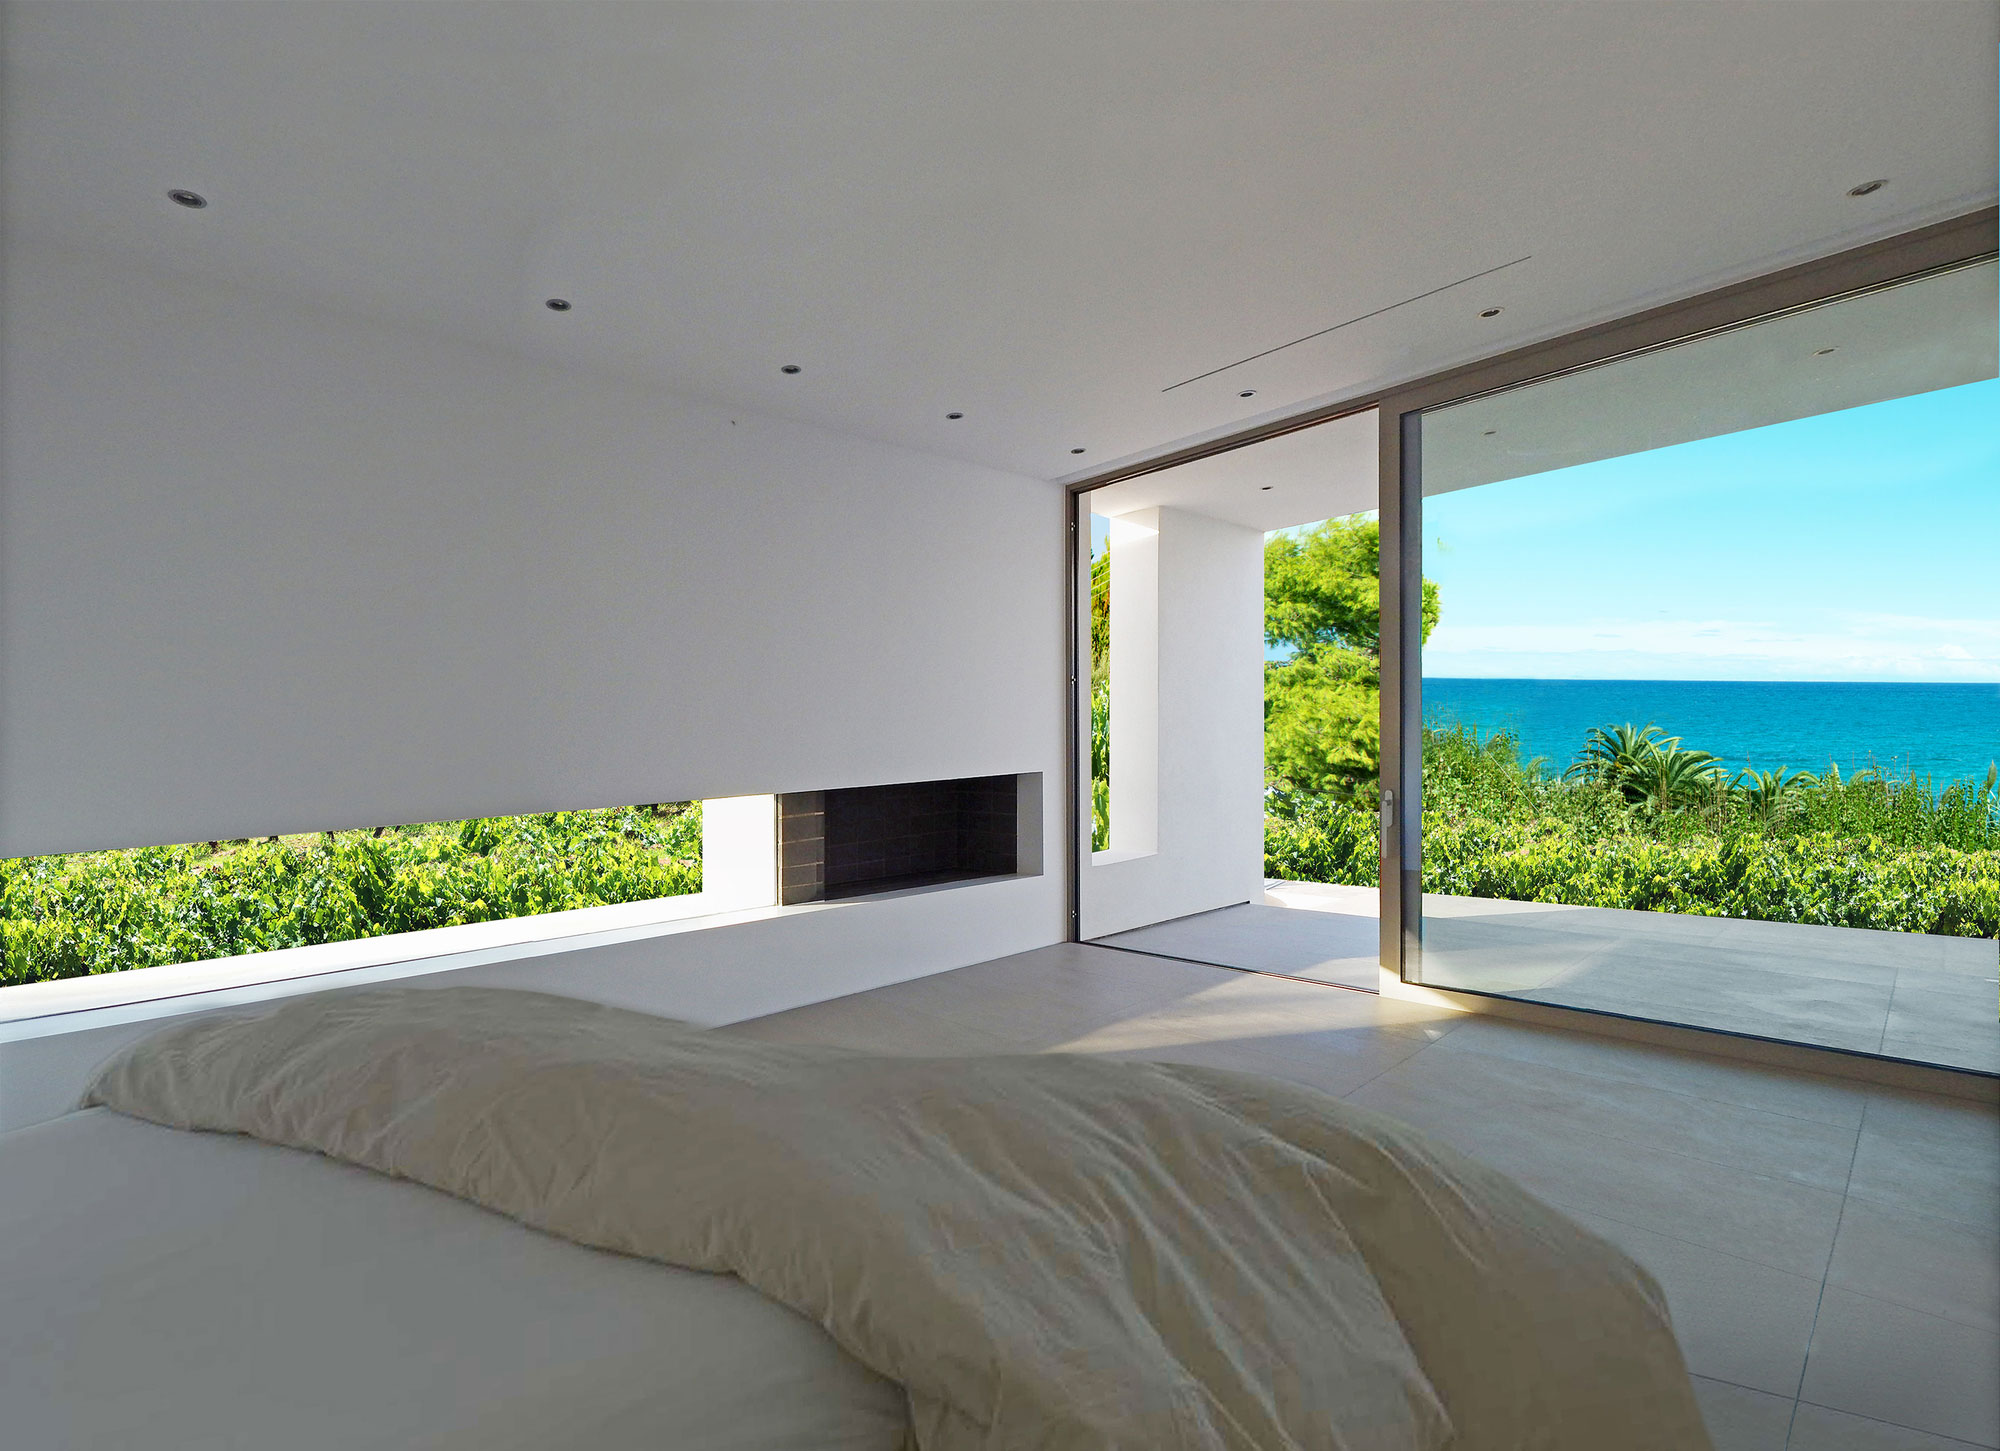 Lombok Architect - Stylish Modern Mediterranean Villa with Ocean View Picture 4